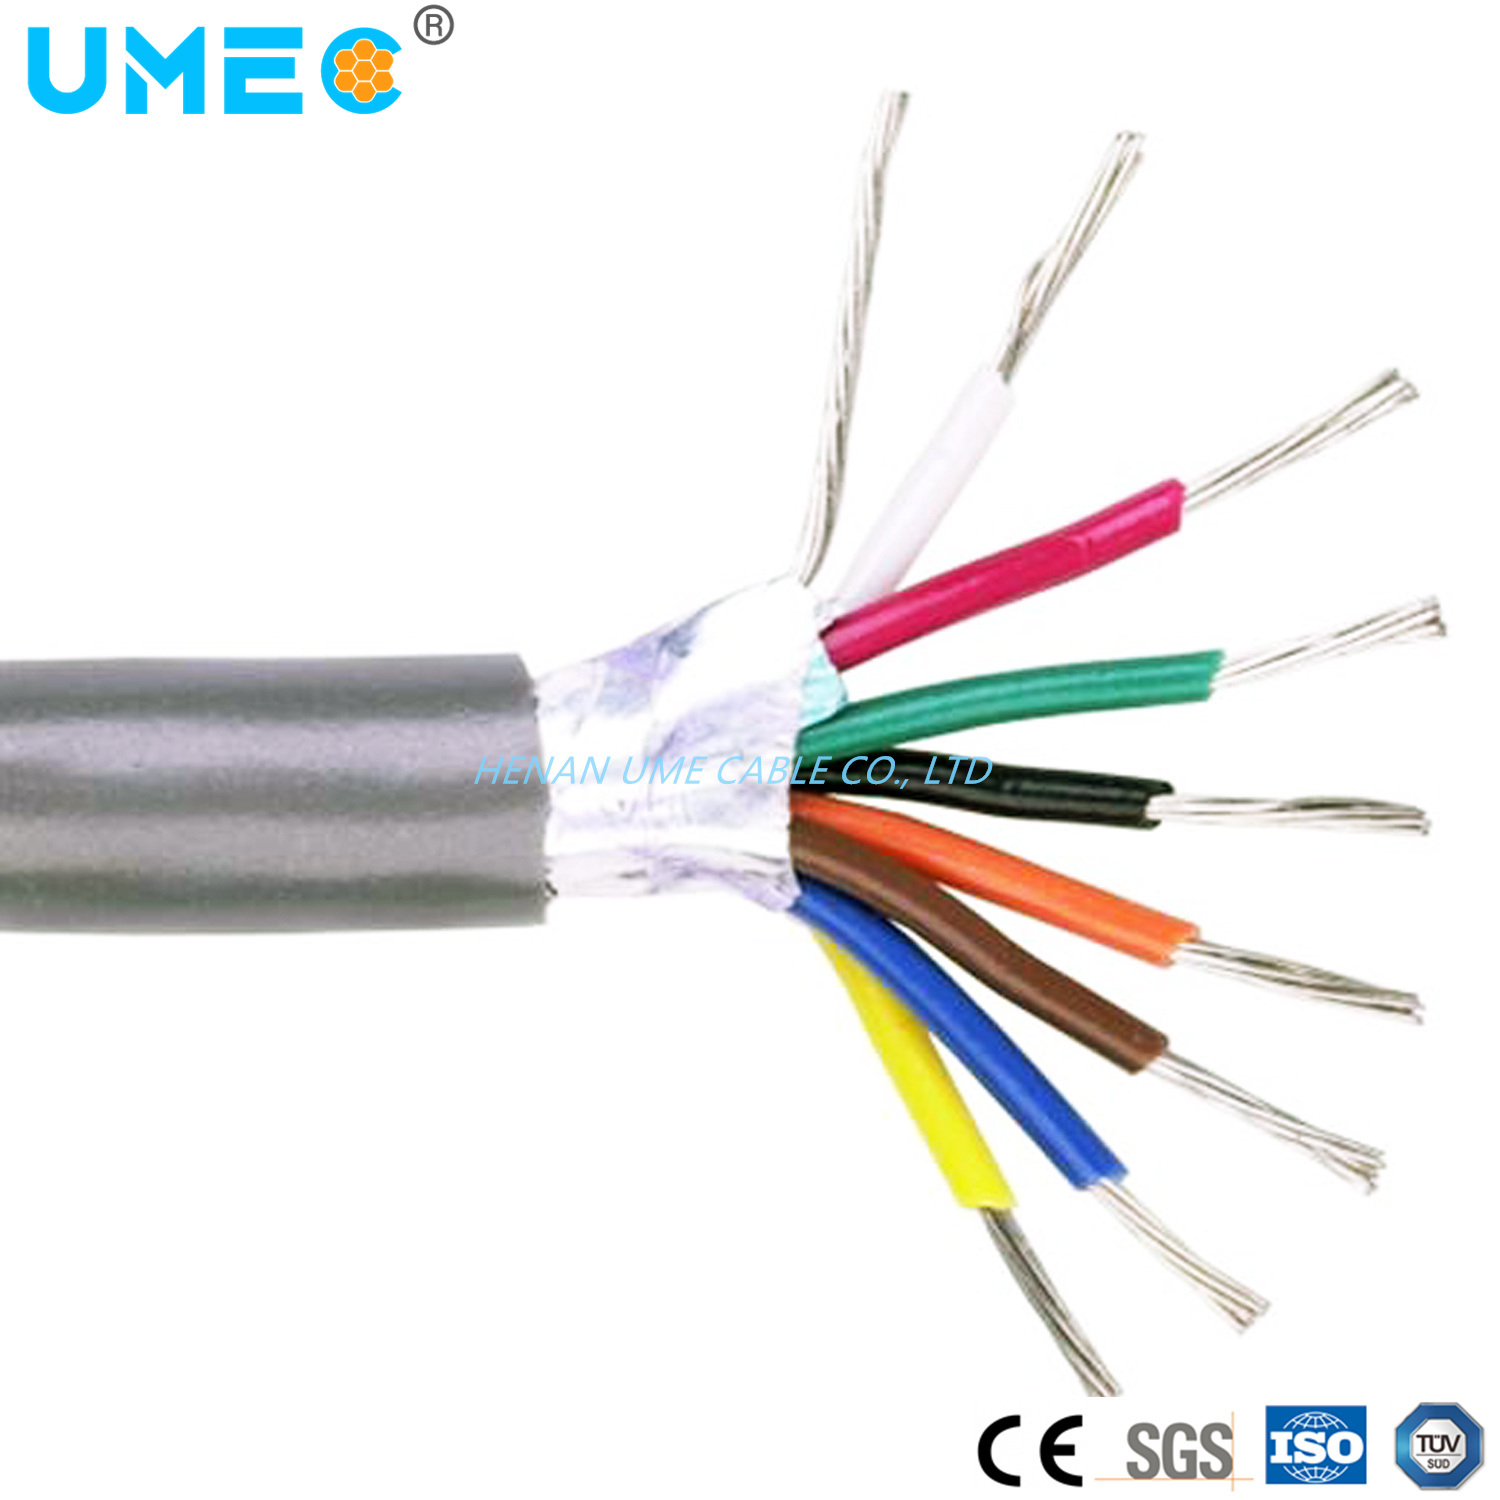 450/750V Moisture-Proof Copper Conductor Control Cable